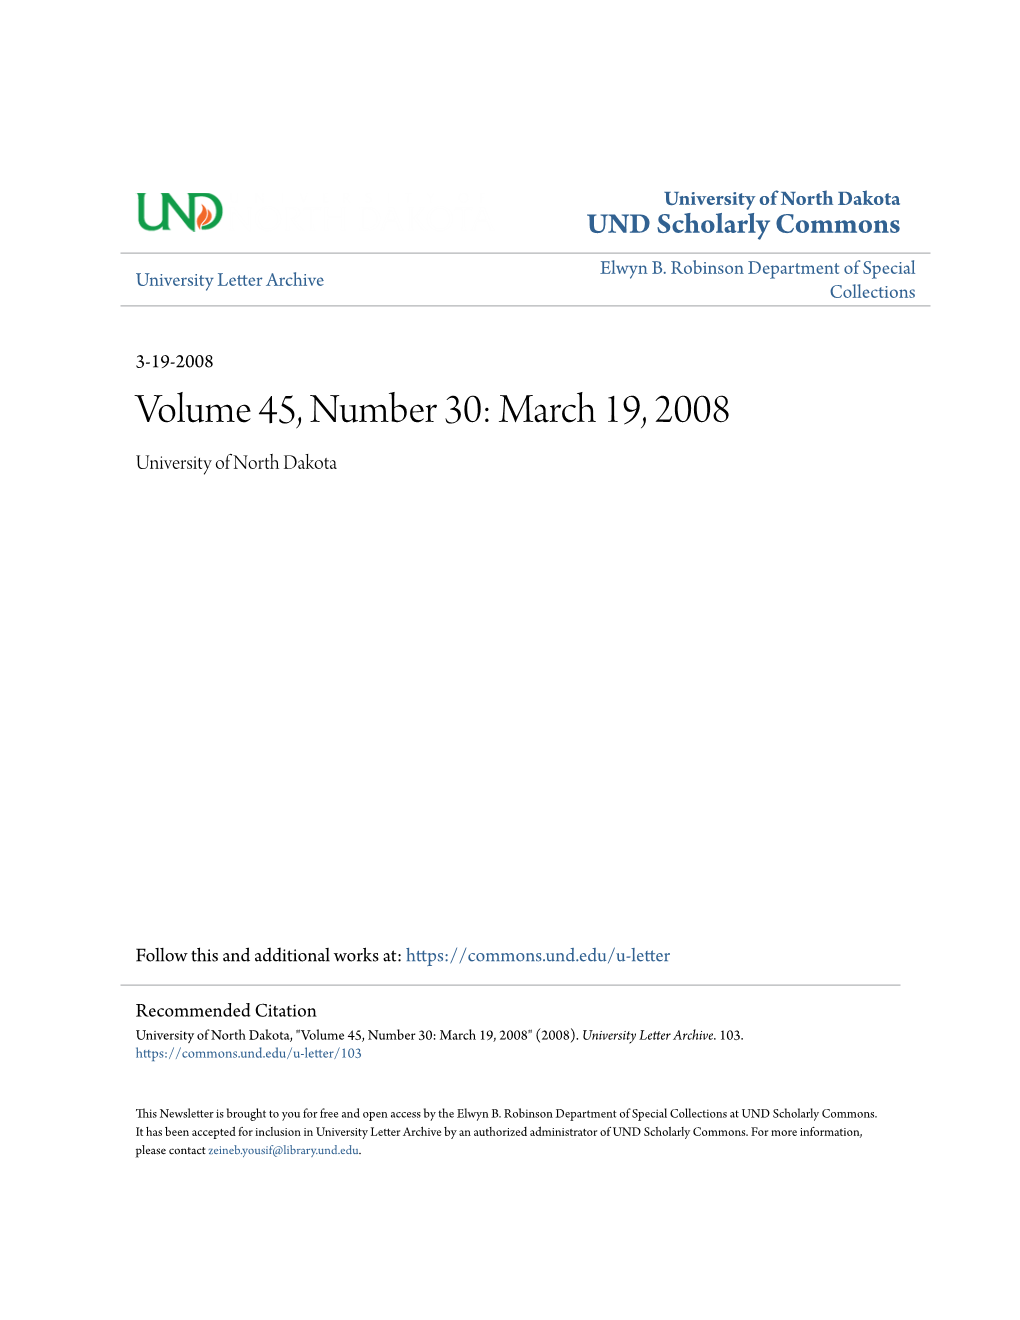 Volume 45, Number 30: March 19, 2008 University of North Dakota